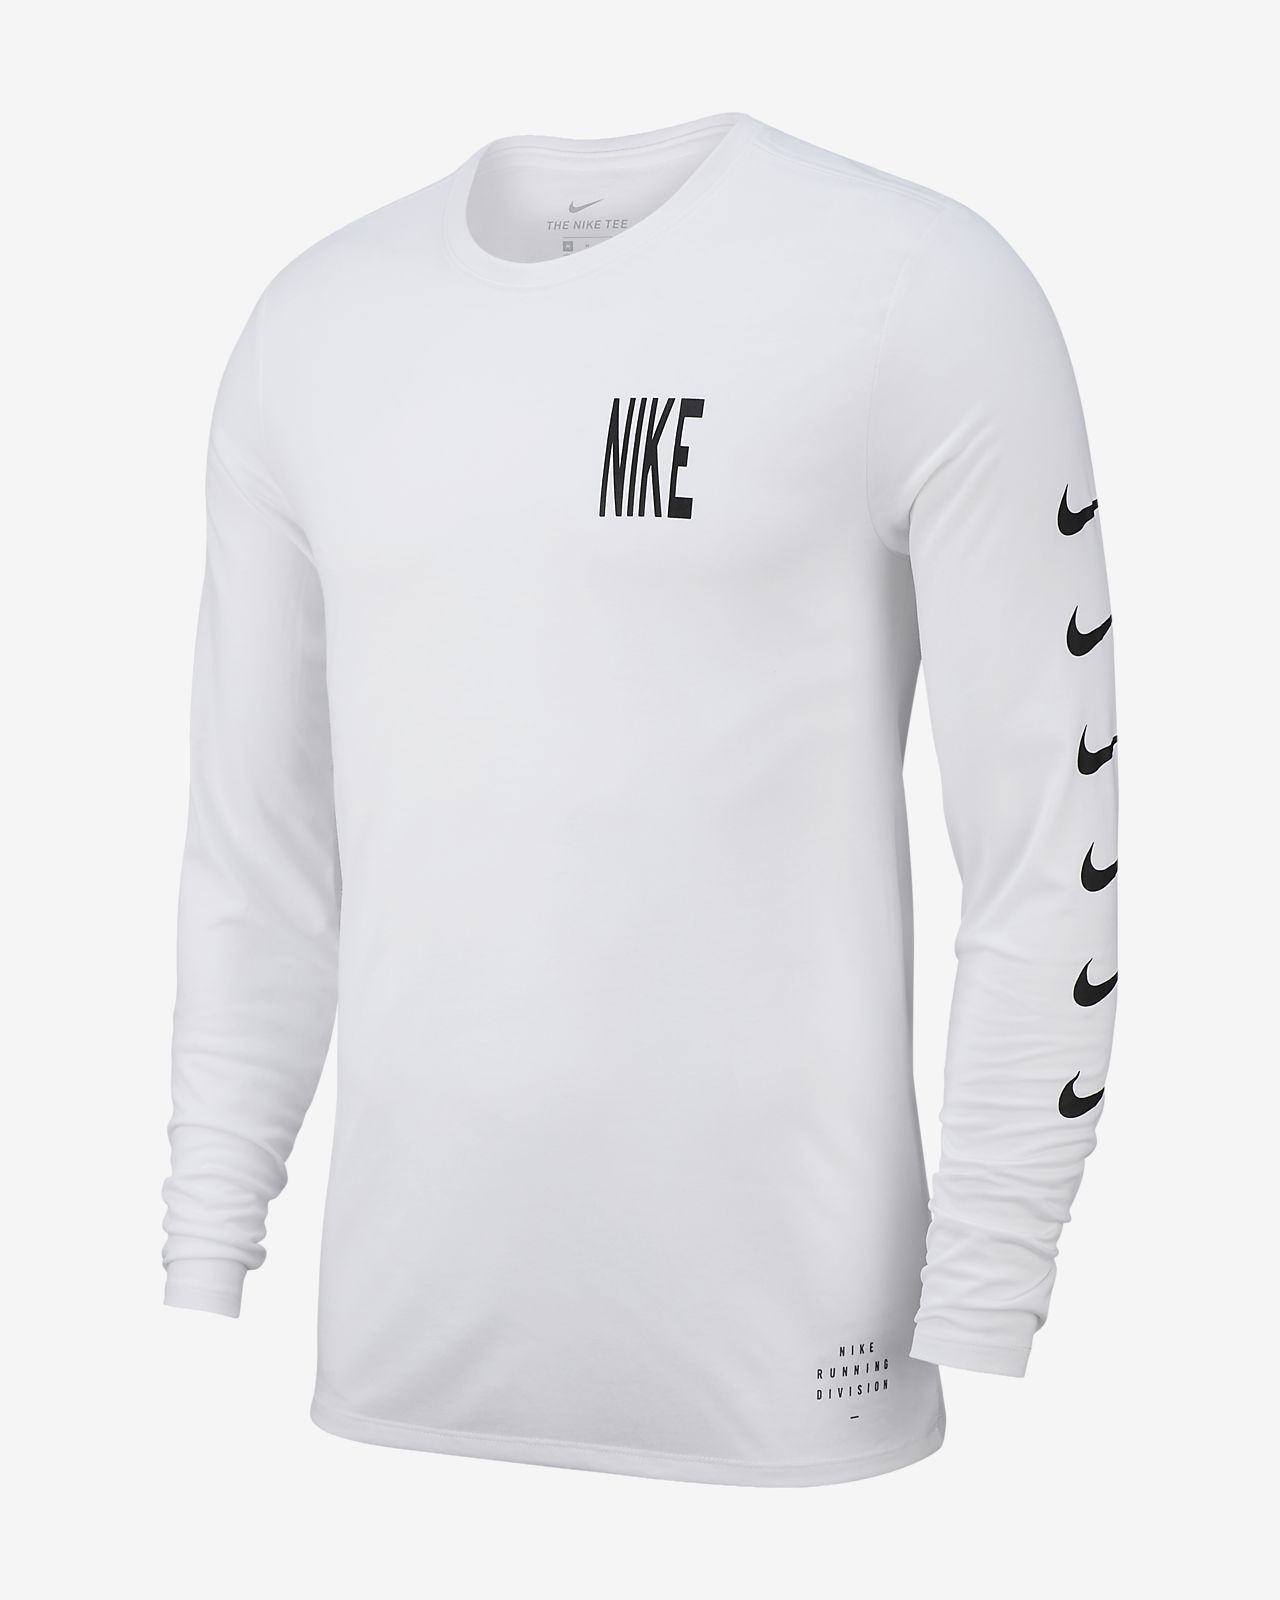  Nike  Dri FIT Men s Long  Sleeve  Running T Shirt  Nike  com IN